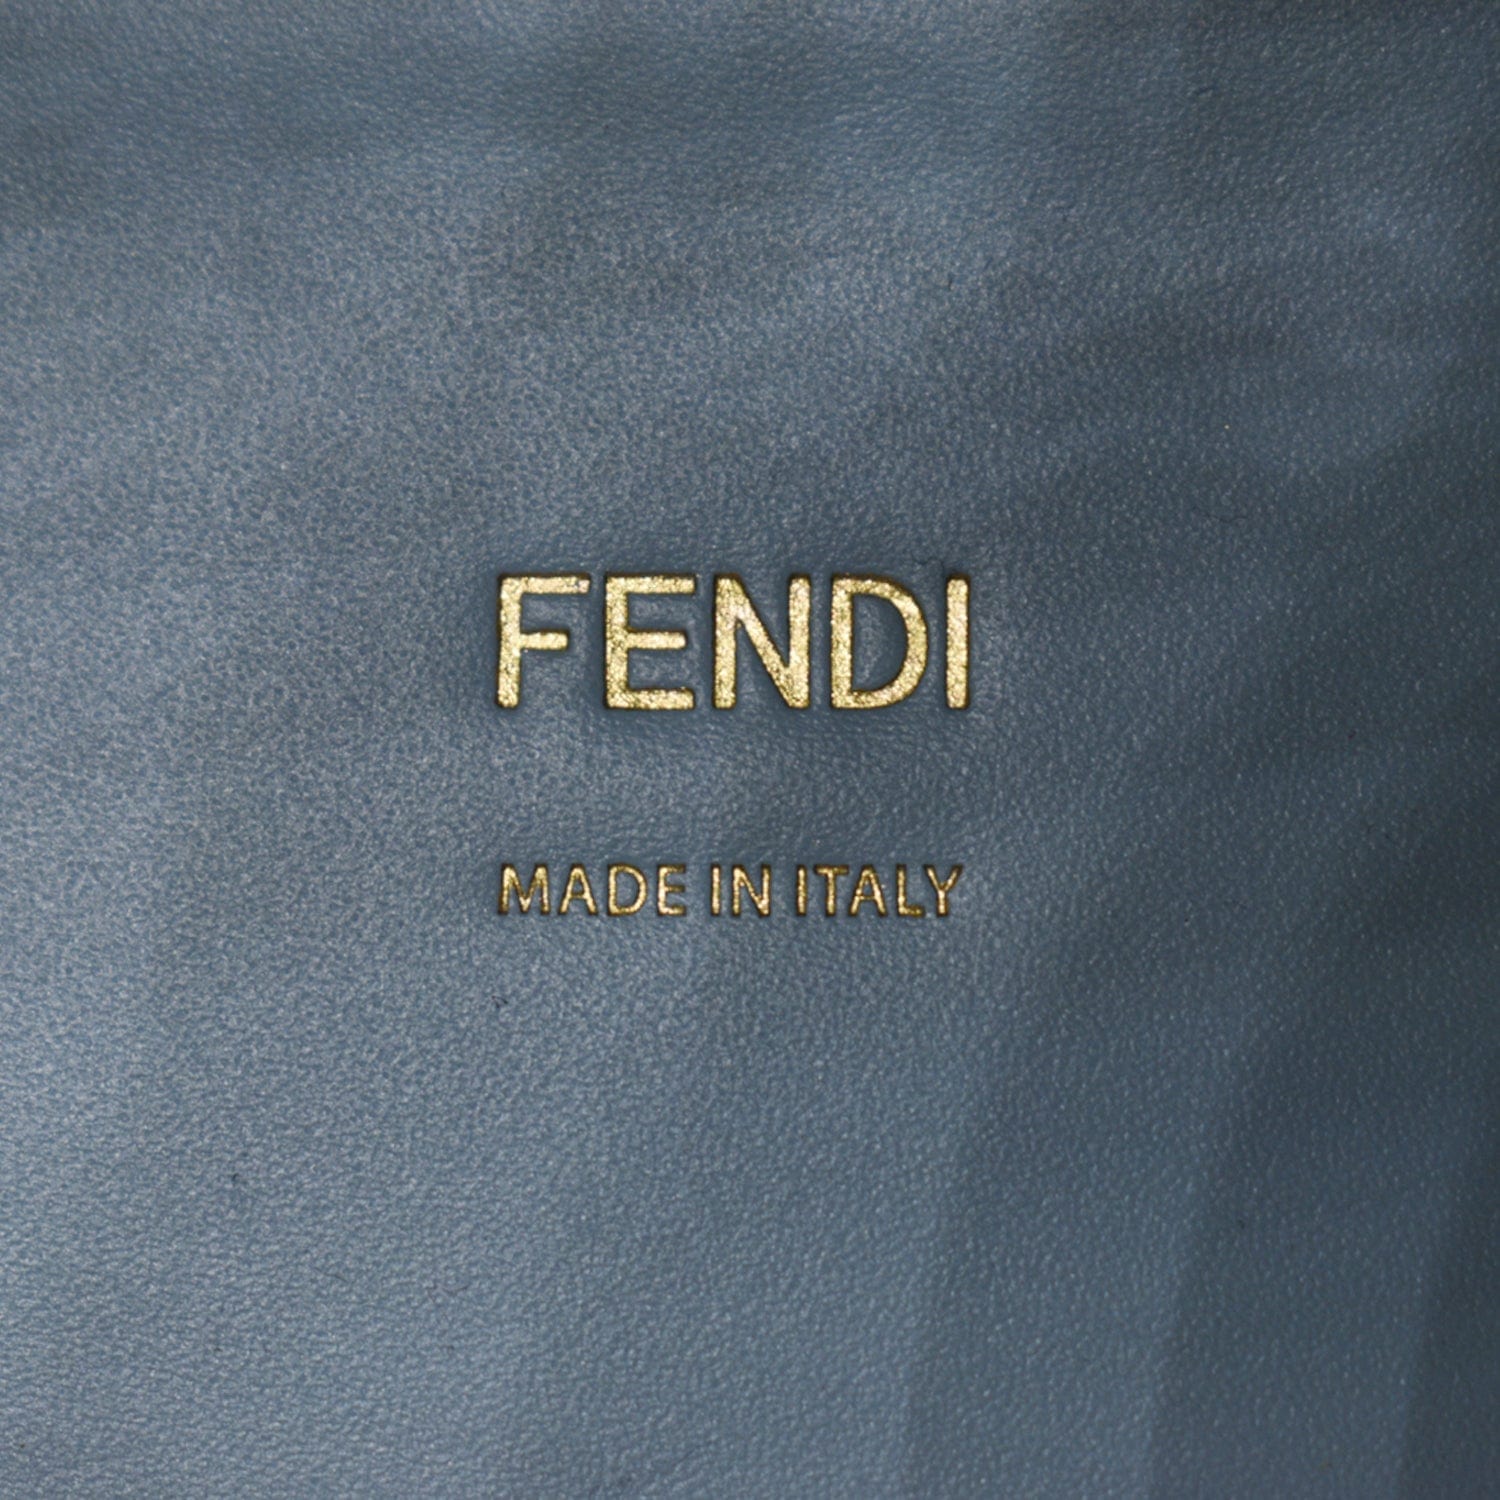 Fendi Sunshine Shopper Tote Leather Medium Neutral